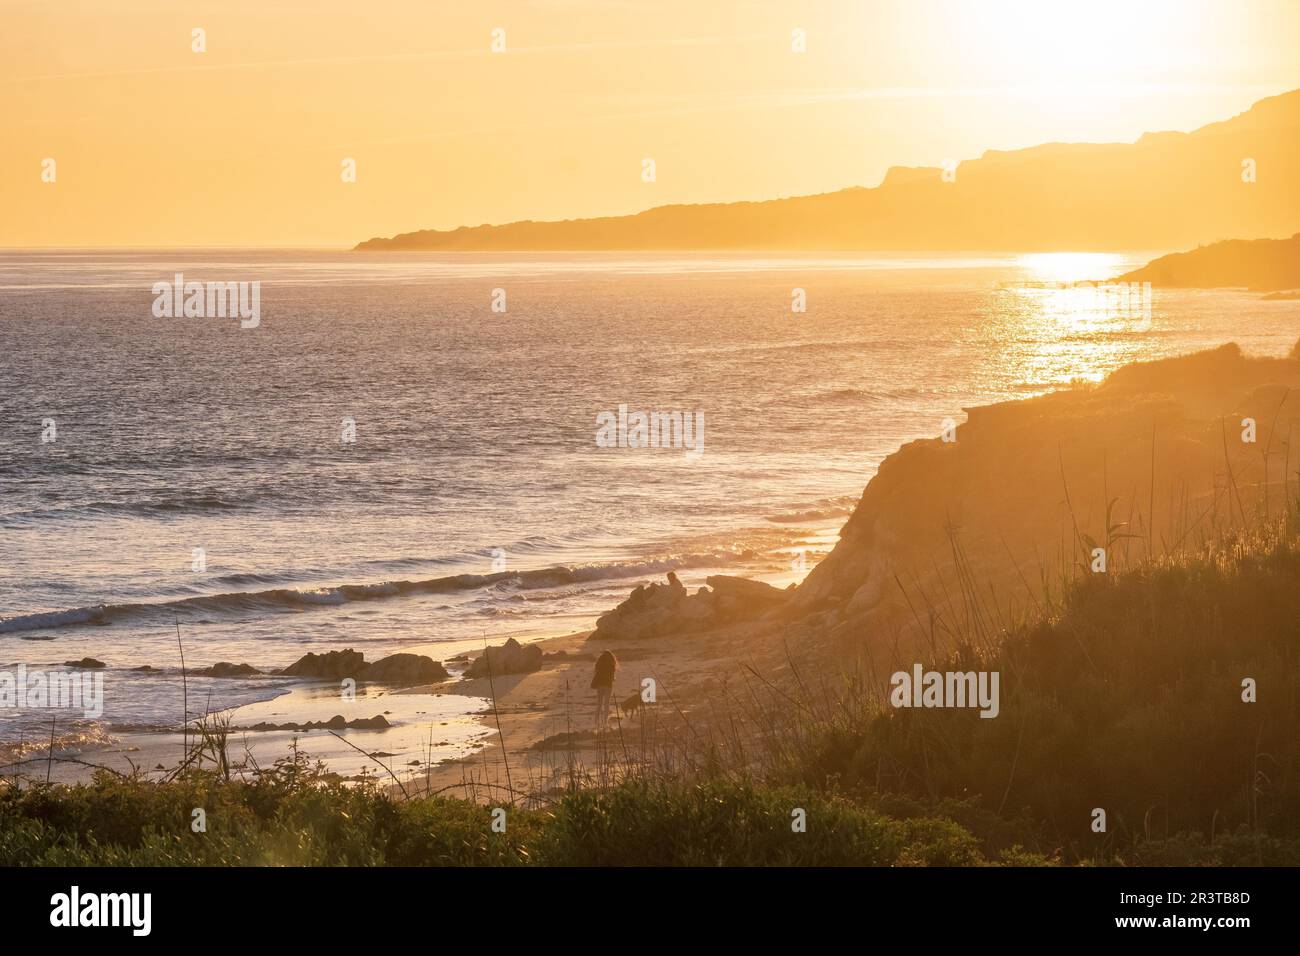 People walk along the beach at sunset at Playa de los Lances on the Strait of Gibraltar, Tarifa, Spain Stock Photo